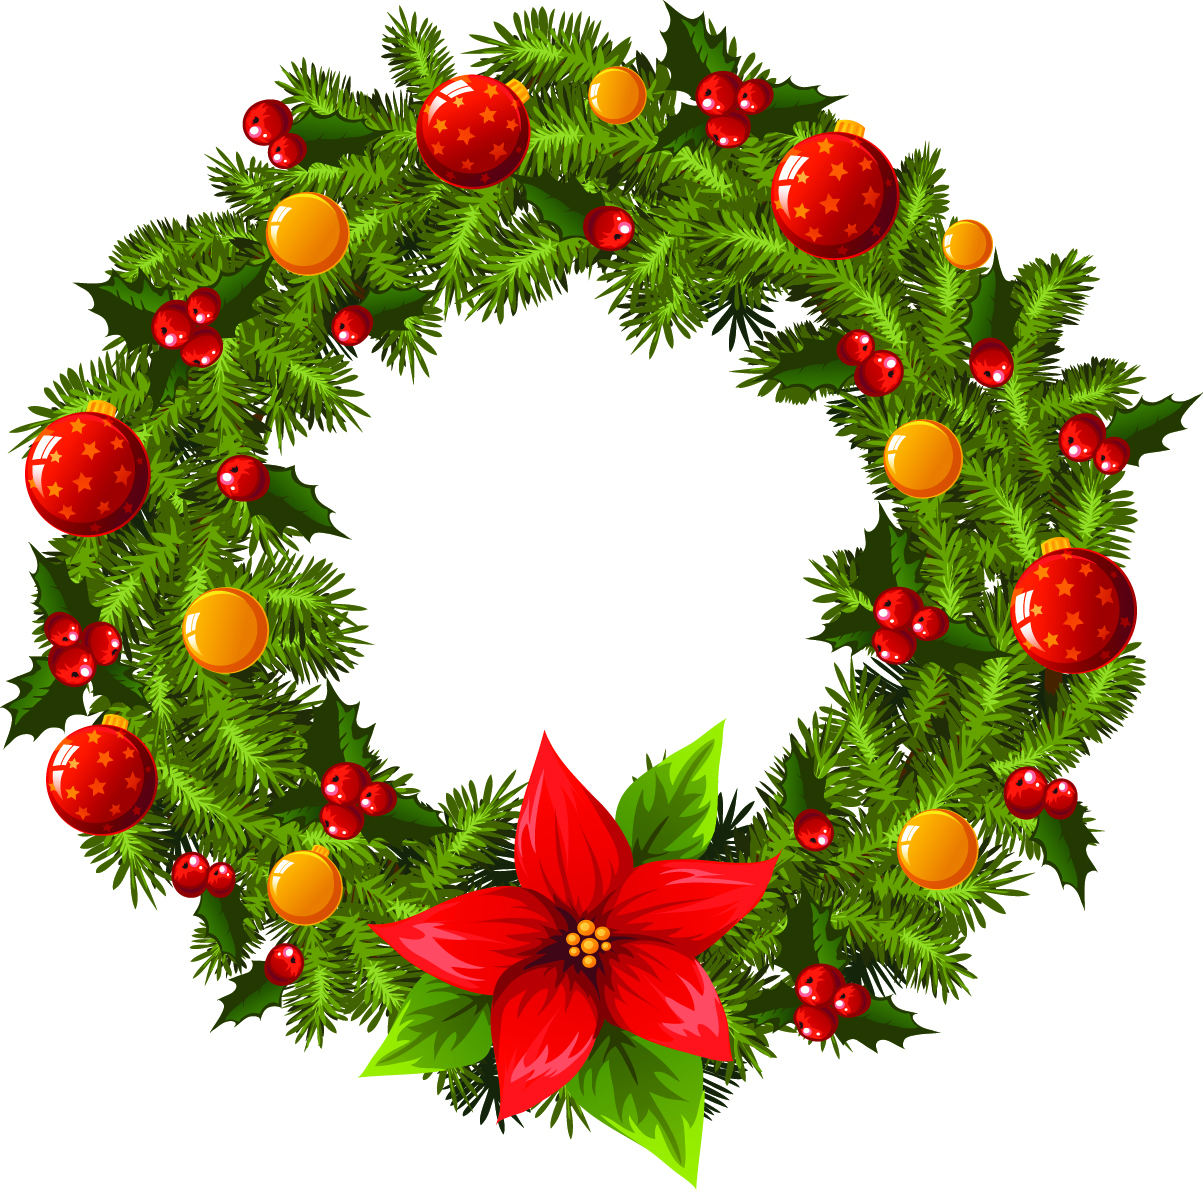 Christmas wreath 2 vector Free Vector / 4Vector